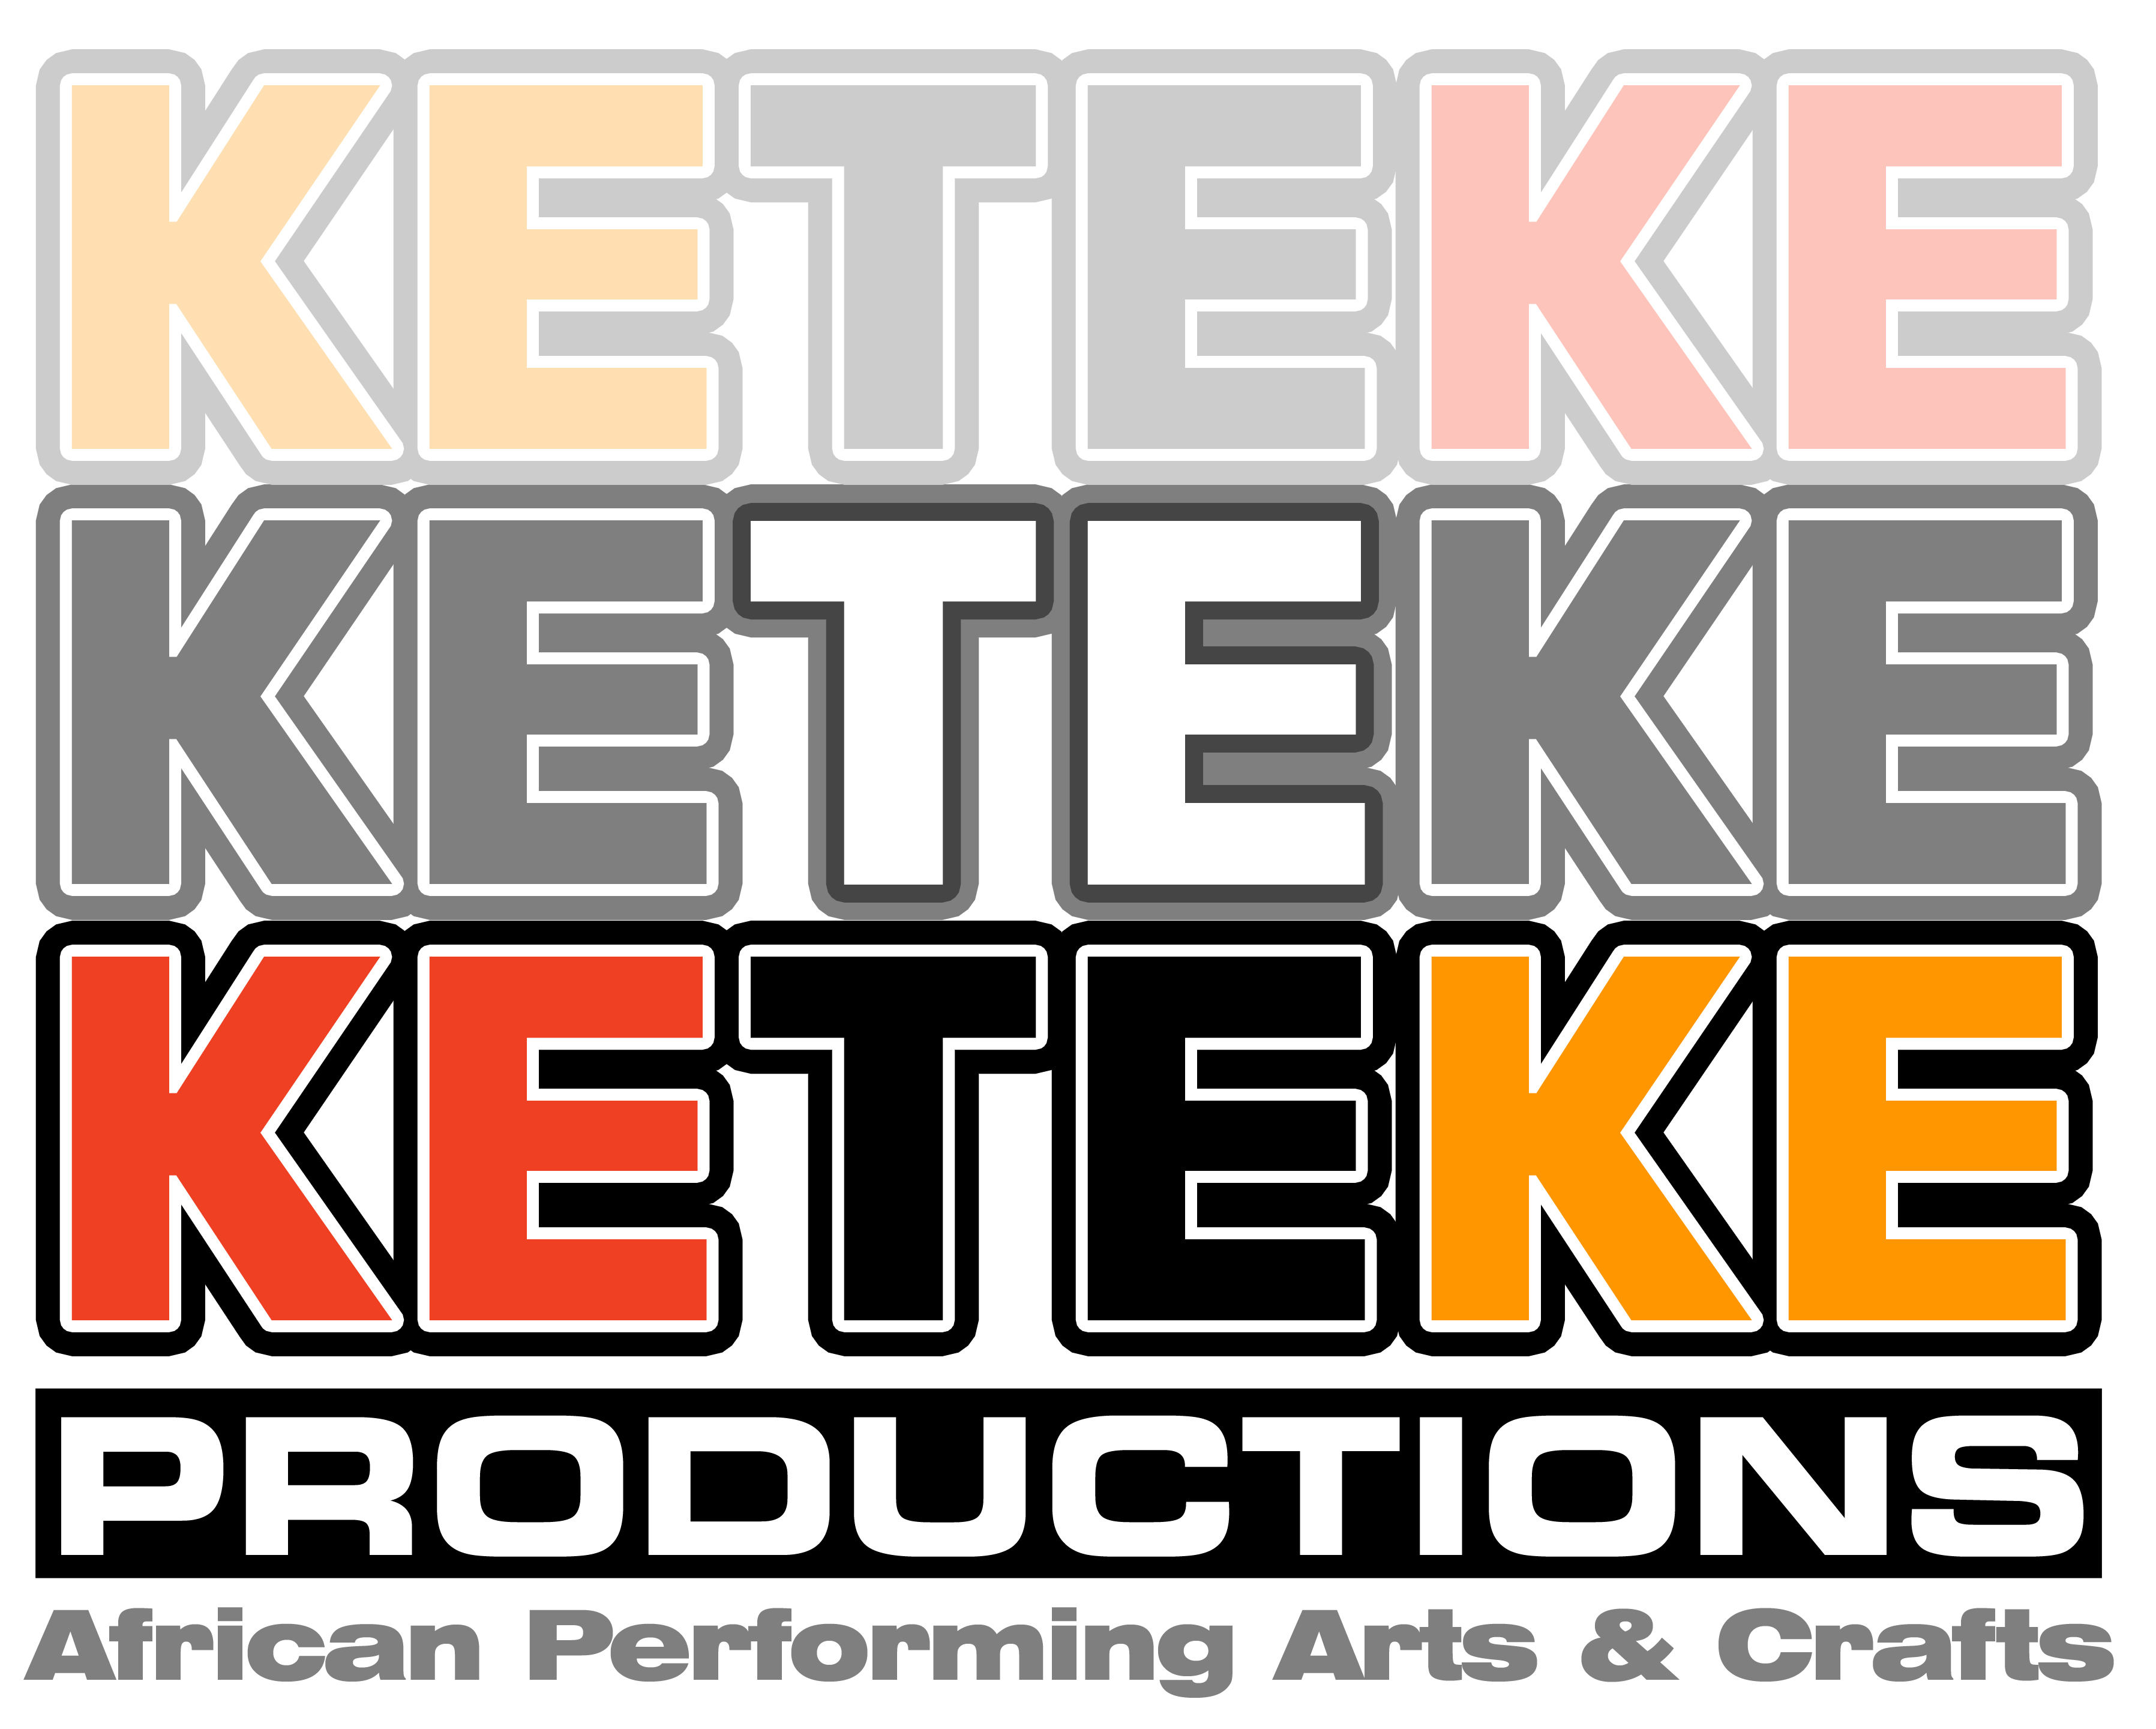 Keteke Productions